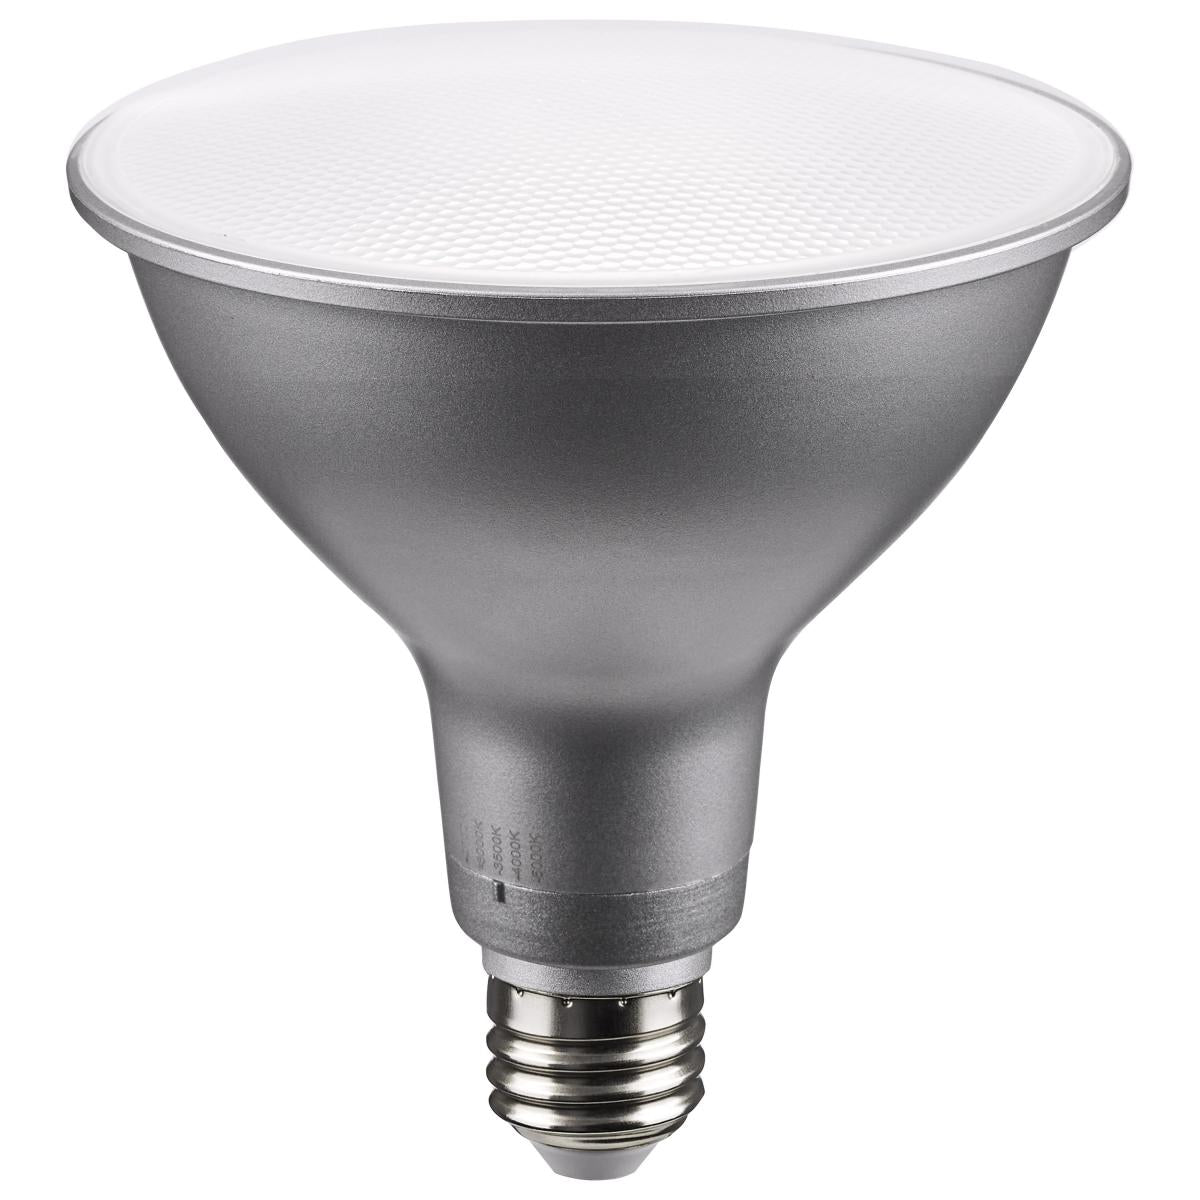 PAR38 Reflector LED Bulb, 13 Watt, 1200 Lumens, Selectable CCT 2700K to 5000K, E26 Medium Base, 25 Deg. Spot